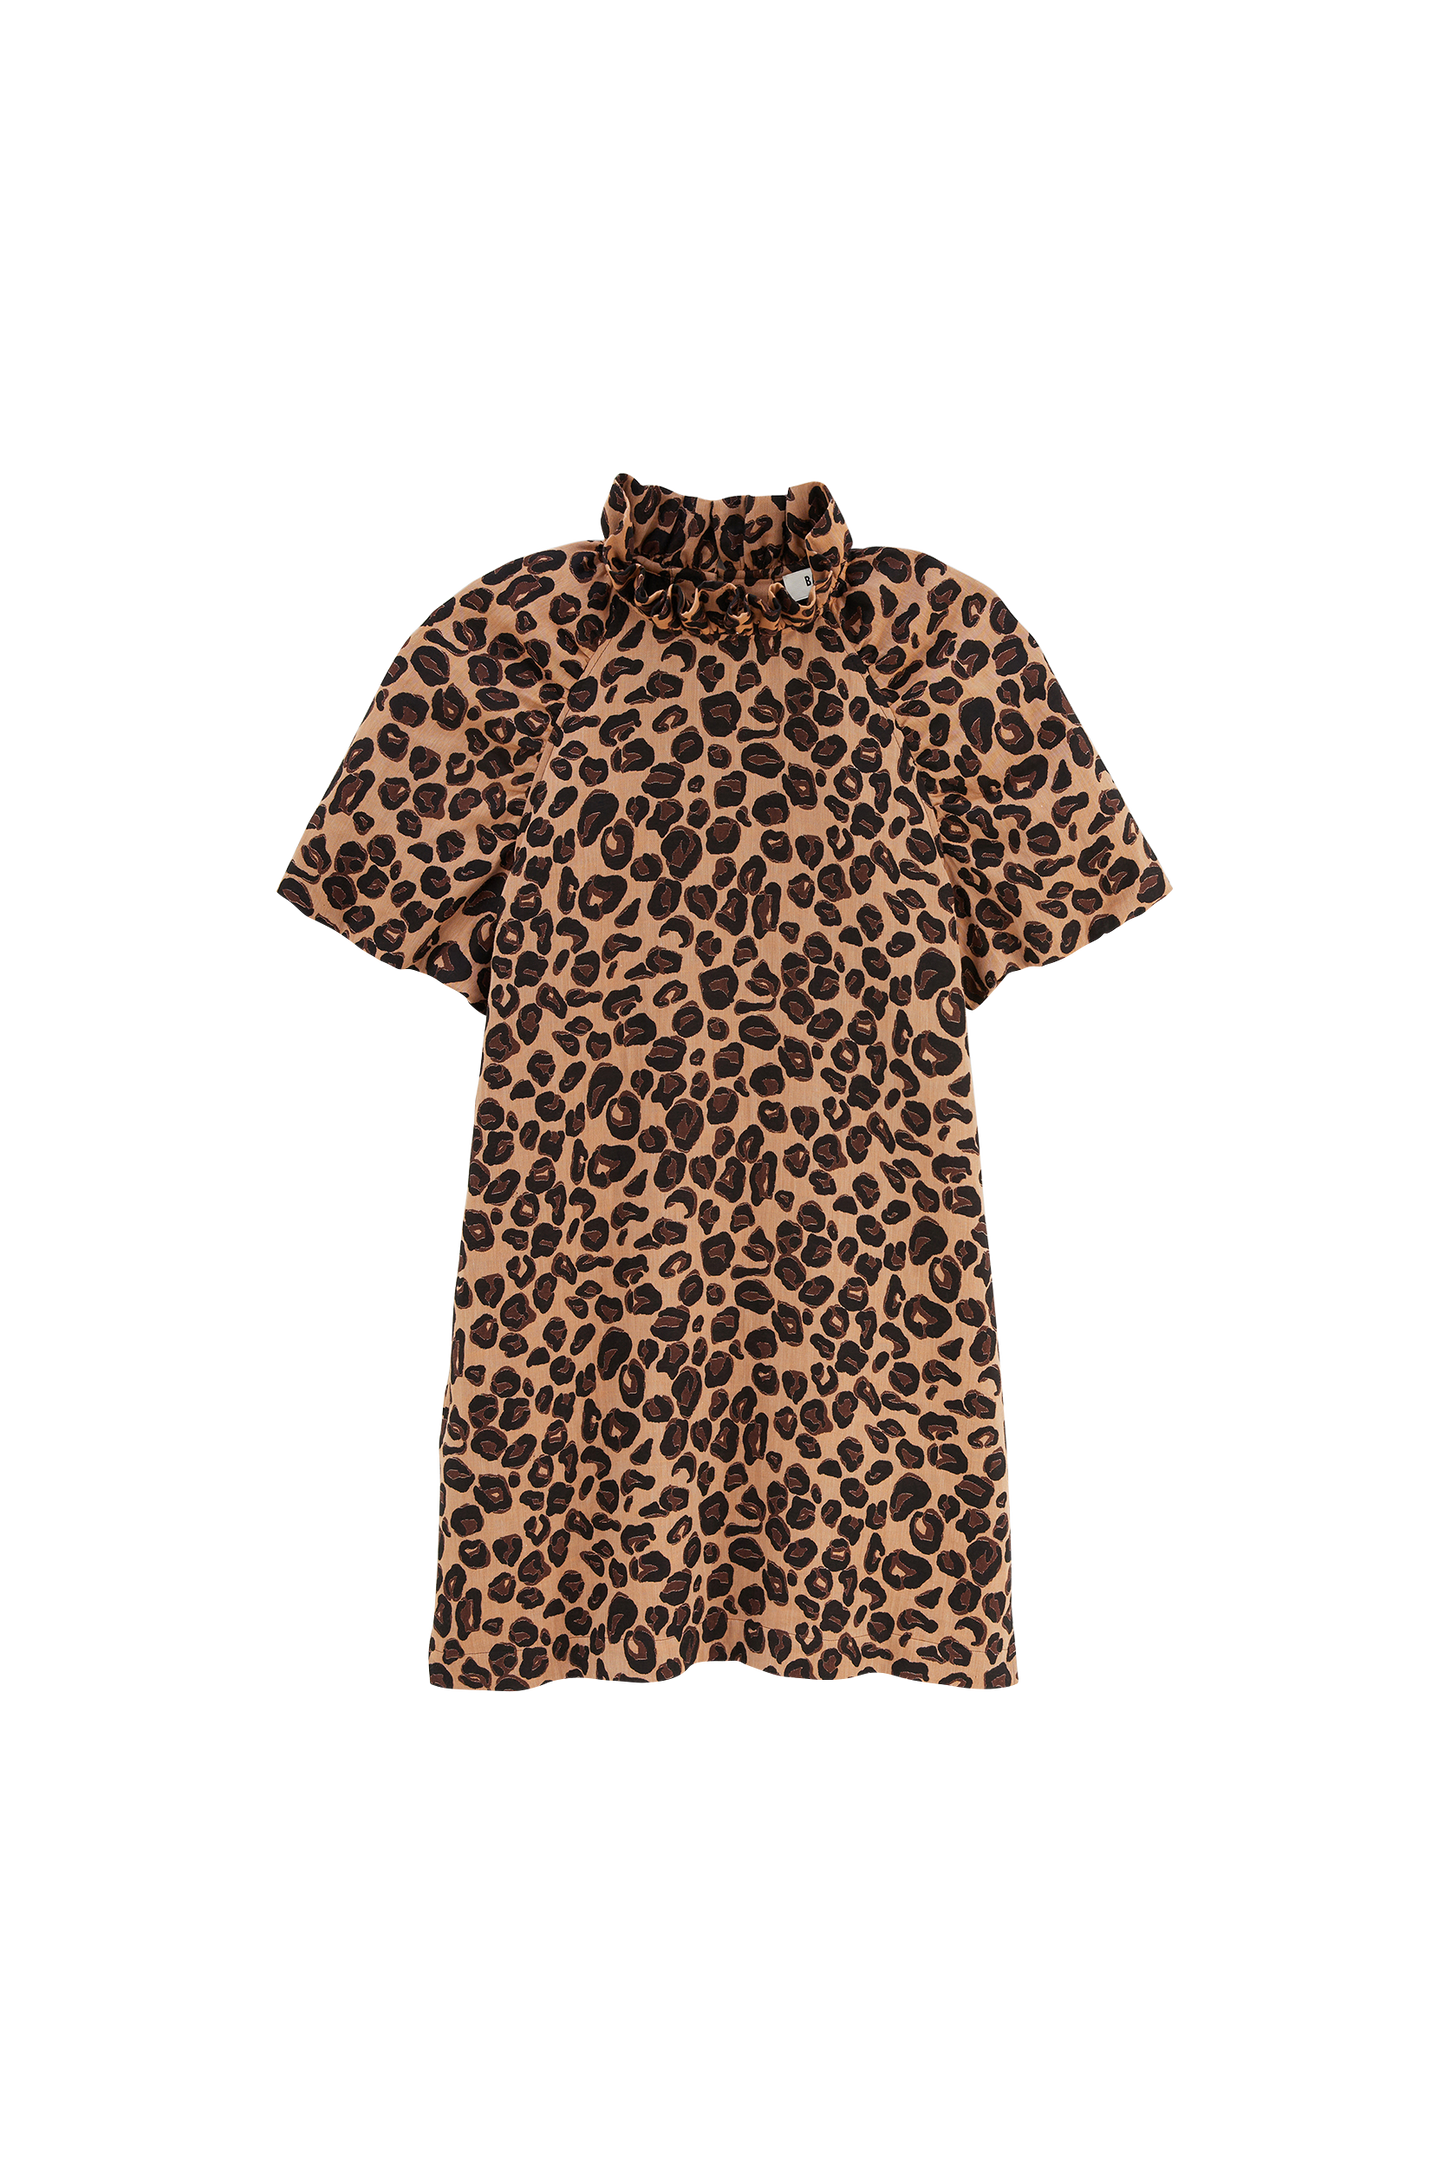 Agata leopard dress